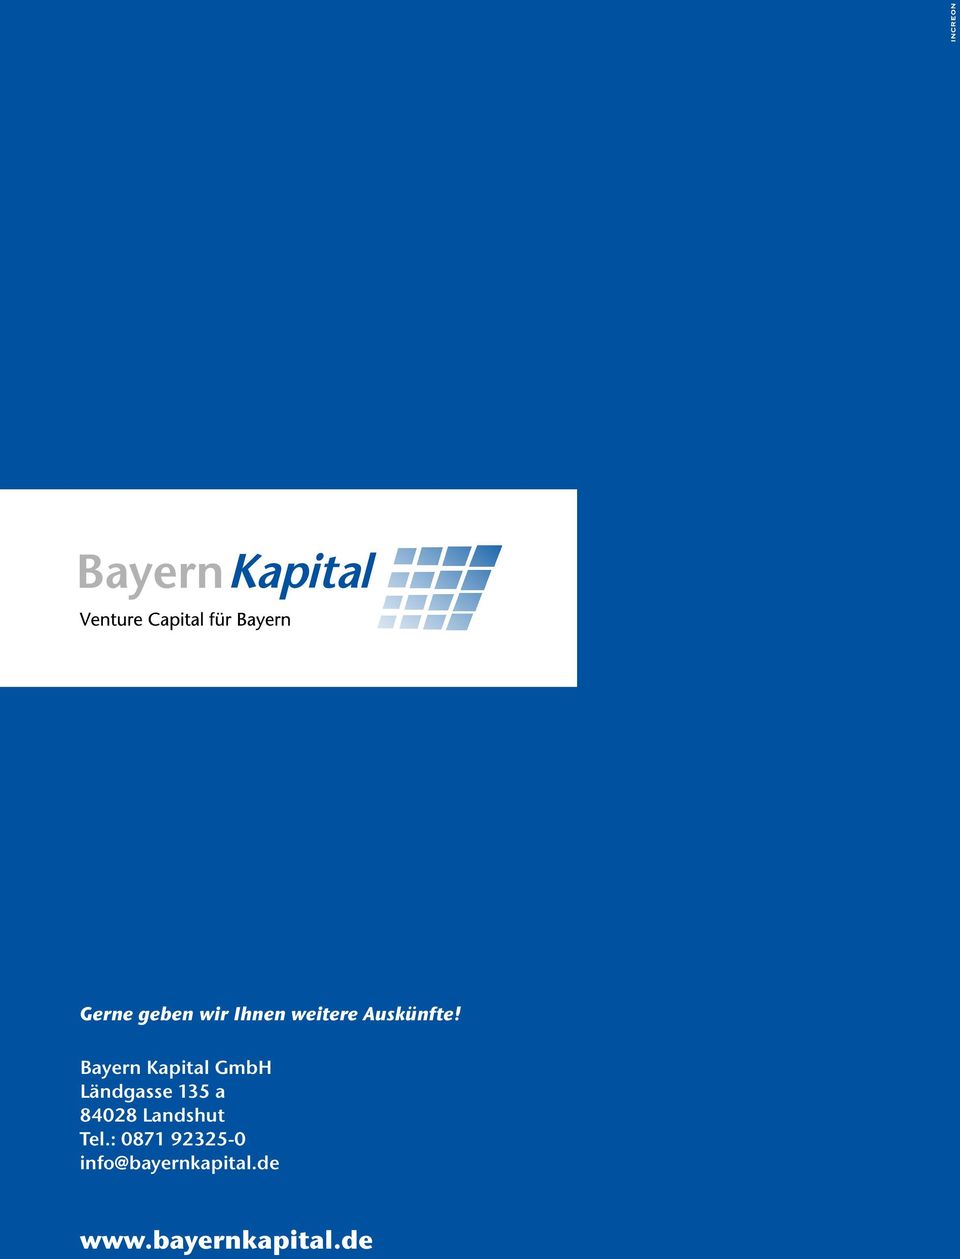 Bayern Kapital GmbH Ländgasse 135 a